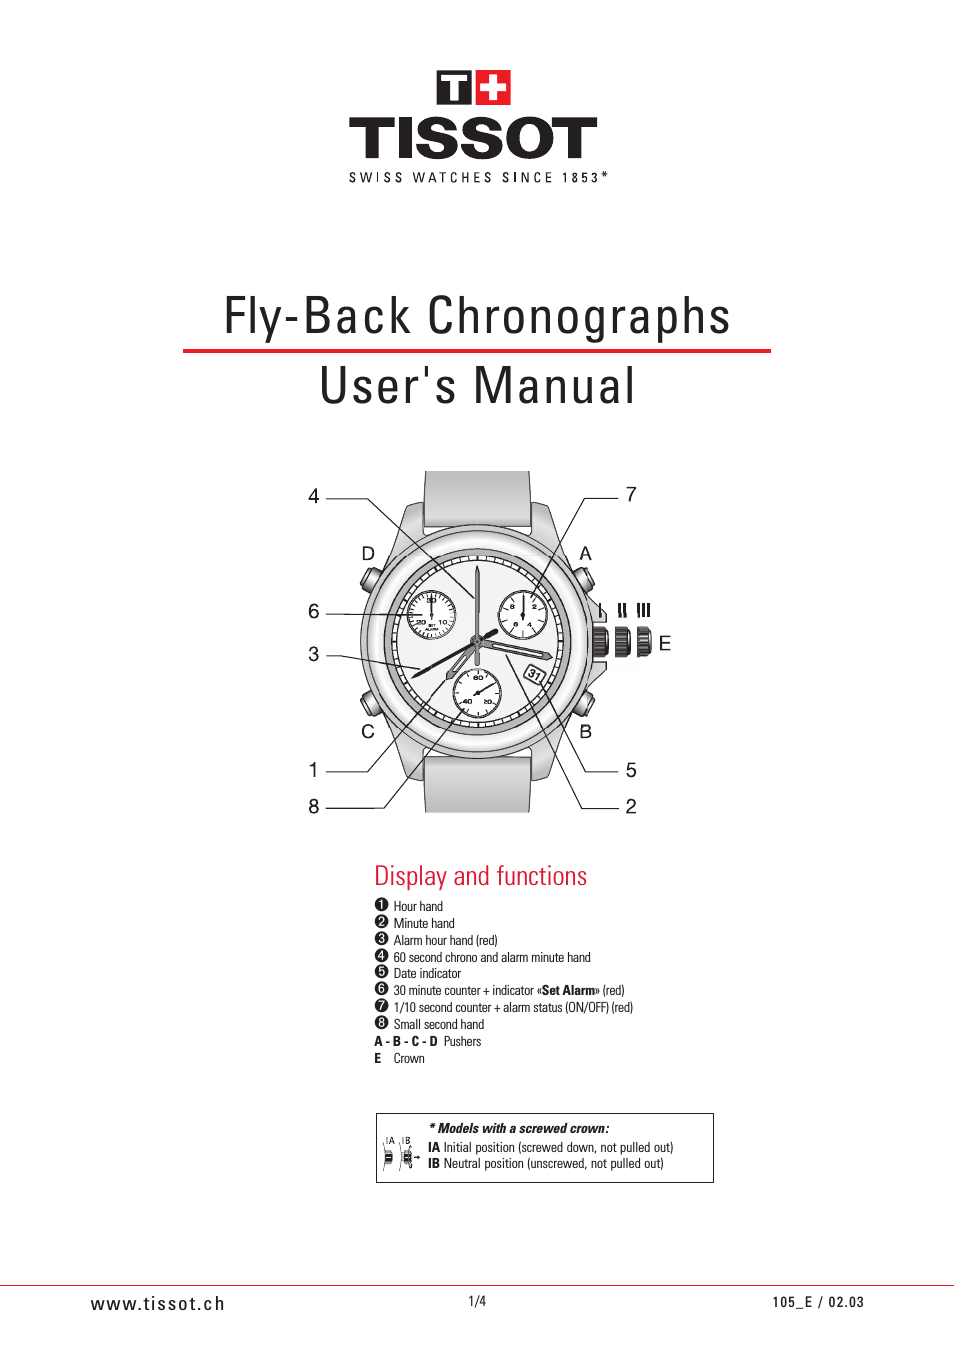 Fly-Back Chronographs